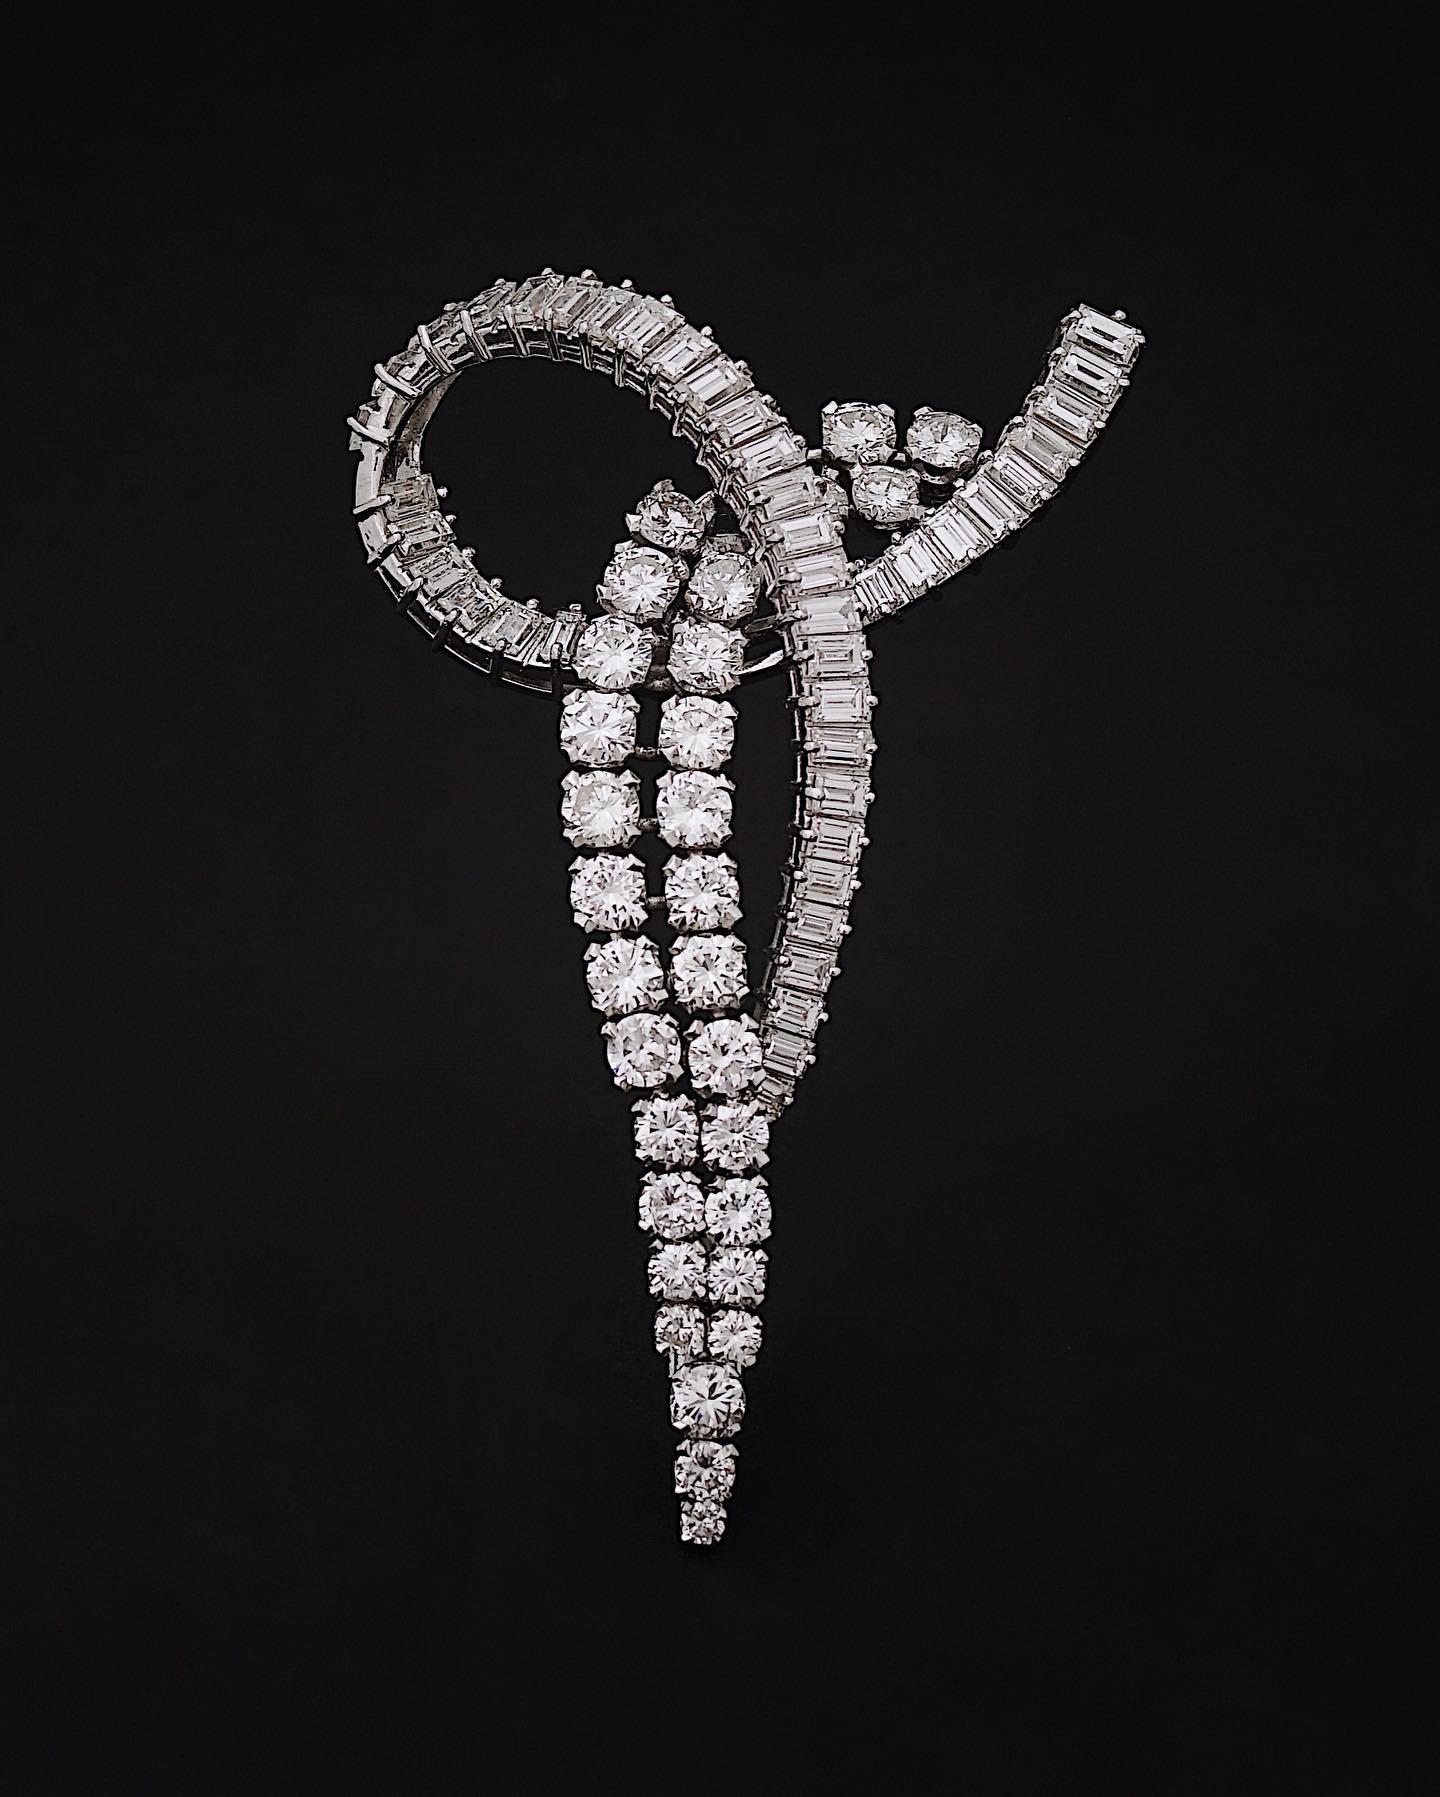 Modern Diamond Brooch and a Diamond Bracelet '17 to 19 carats total', Set on Platinum